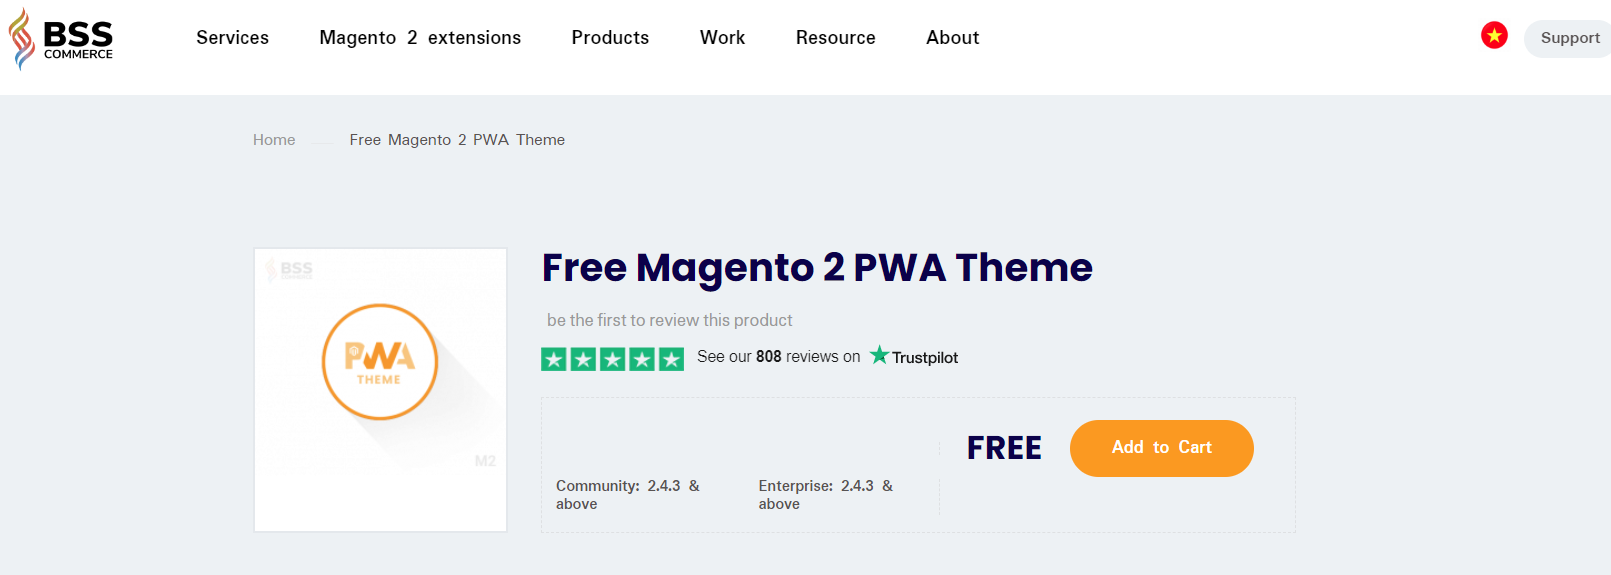 Magento 2 PWA Theme by BSS Commerce 